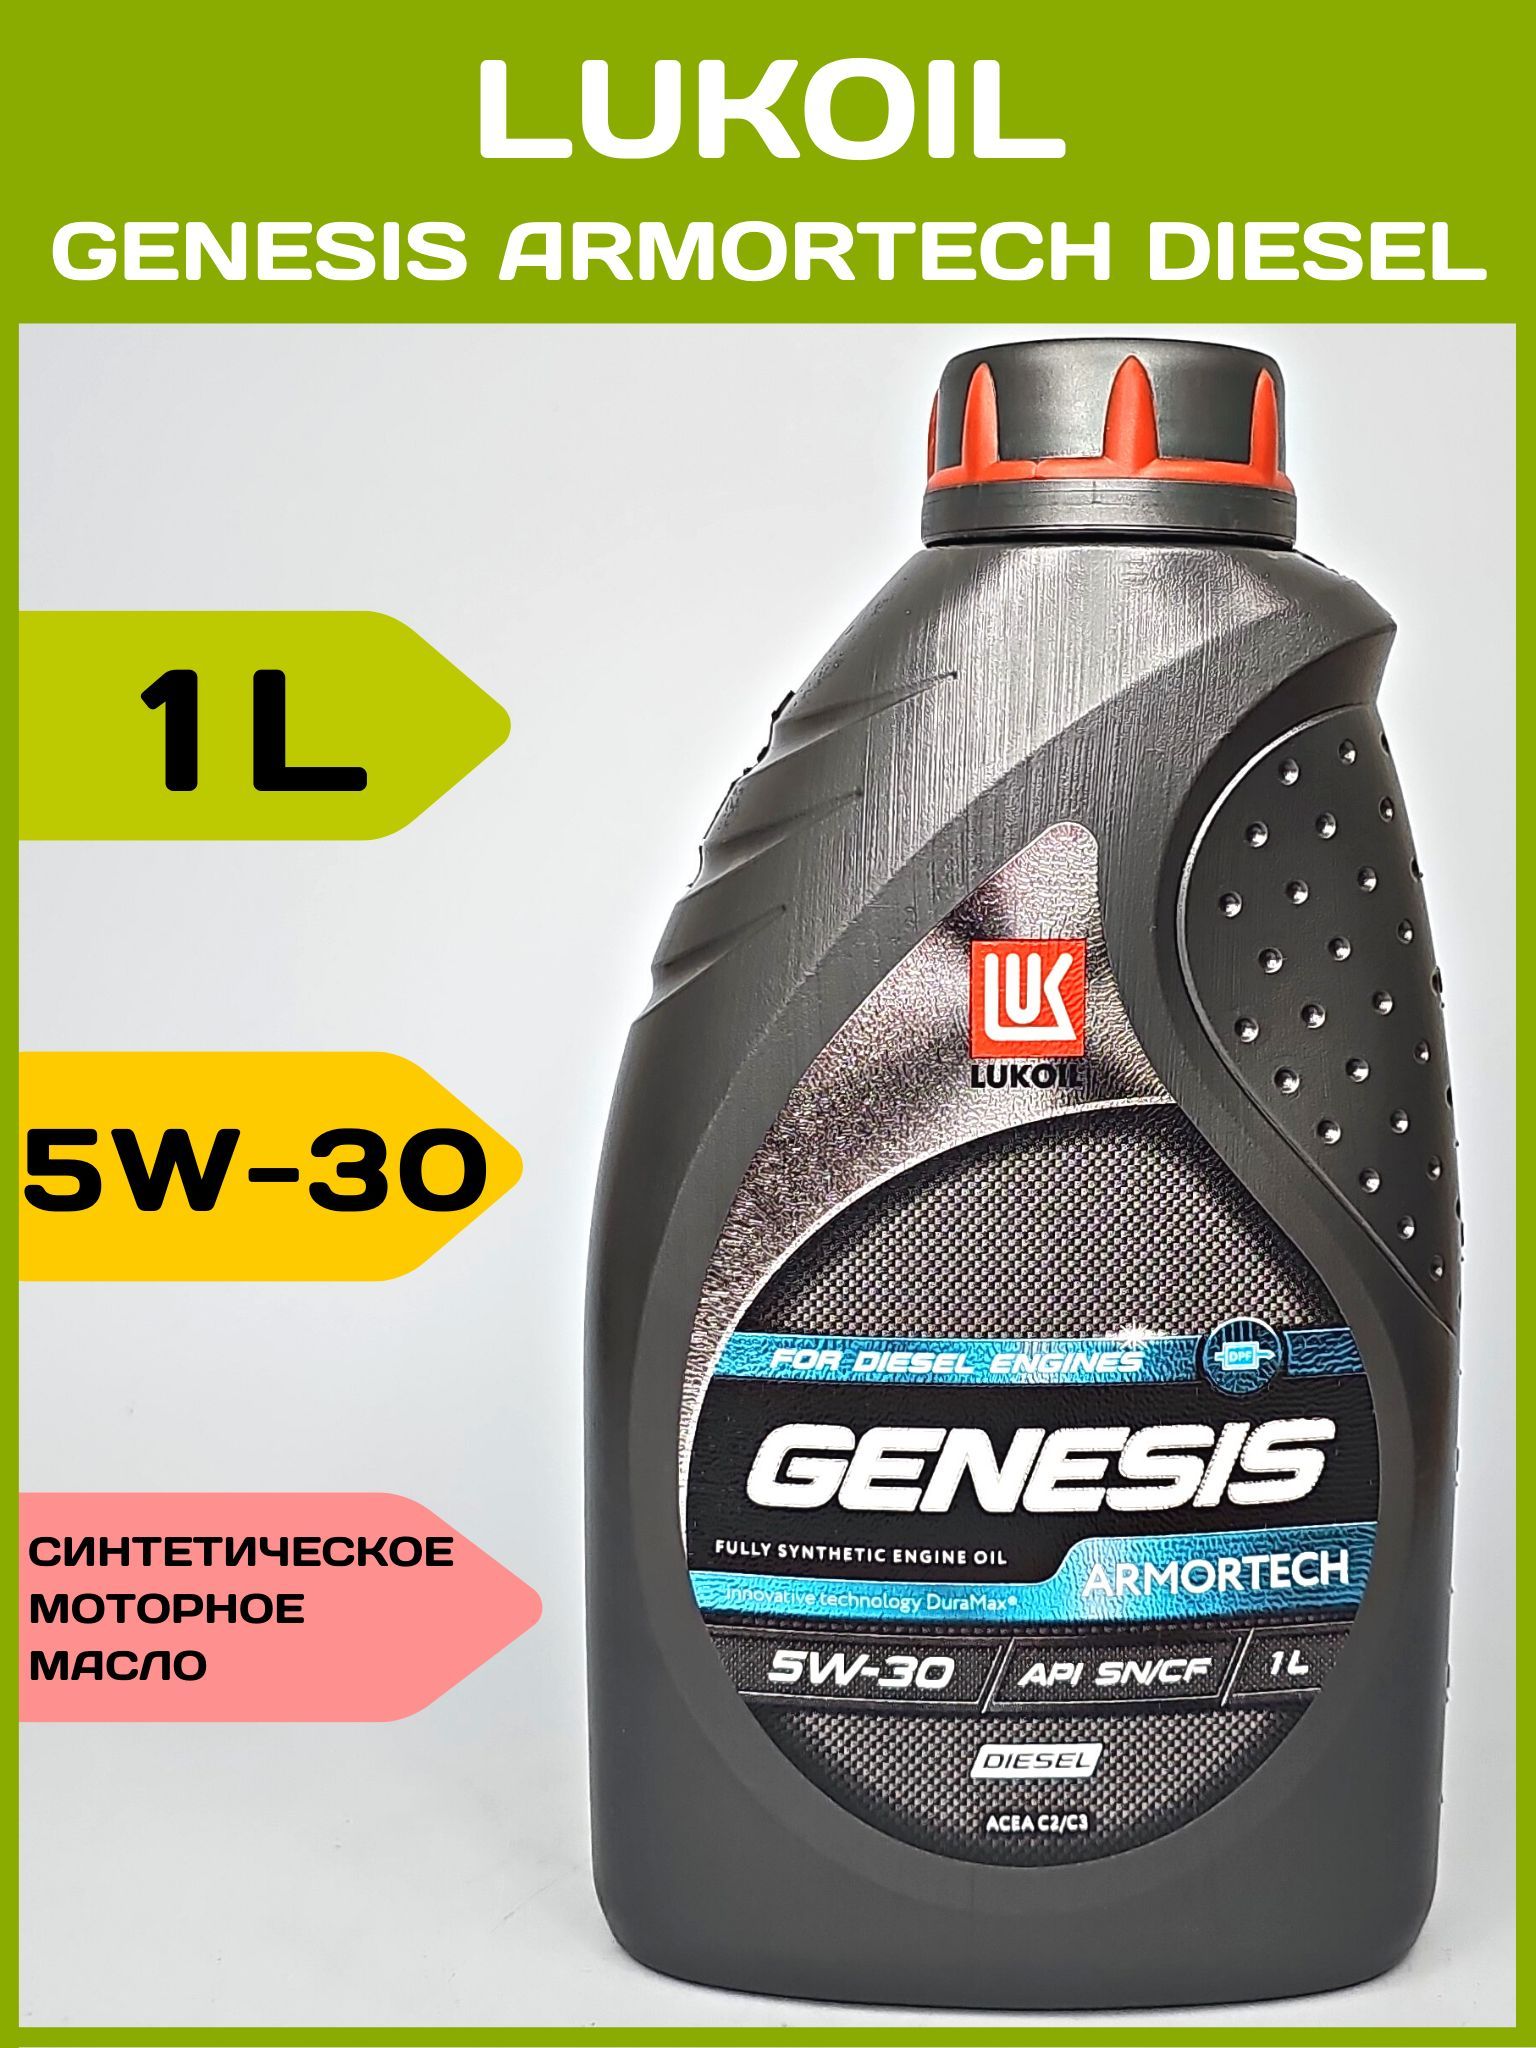 Lukoil Genesis Armortech dexos2. Lukoil Genesis 5w30. Лукойл Генезис 5в30 дизель. Армотек масло Генезис 5w-30. Масло лукойл генезис 5w30 дизель